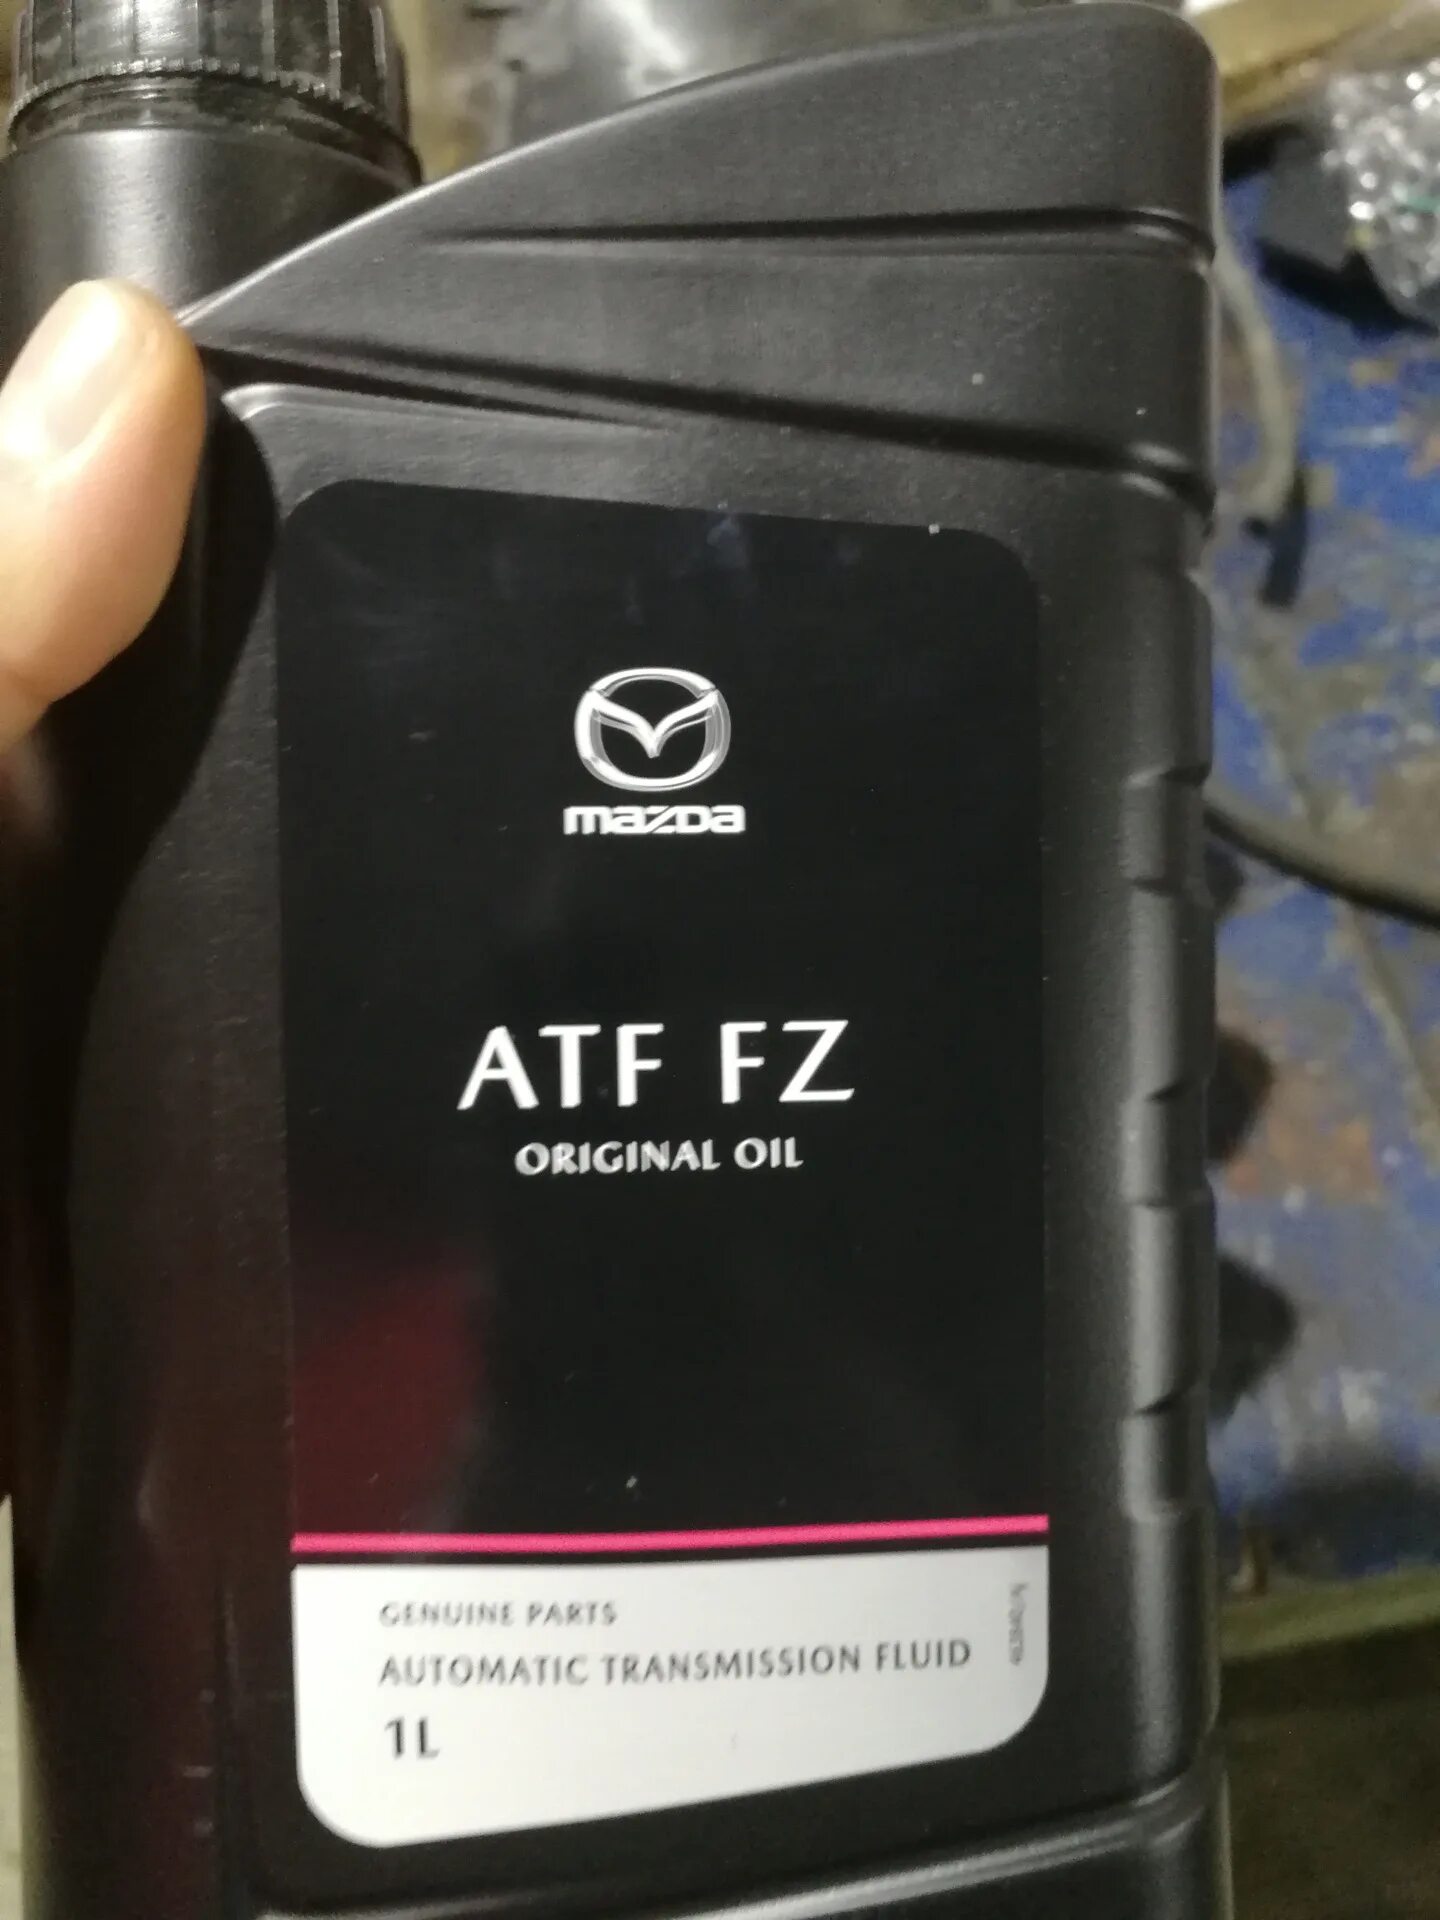 Atf fz купить. Mazda ATF FZ. ATF FZ Mazda артикул 830077994. Mazda ATF FZ оригинал. ATF FZ Mazda 5л.